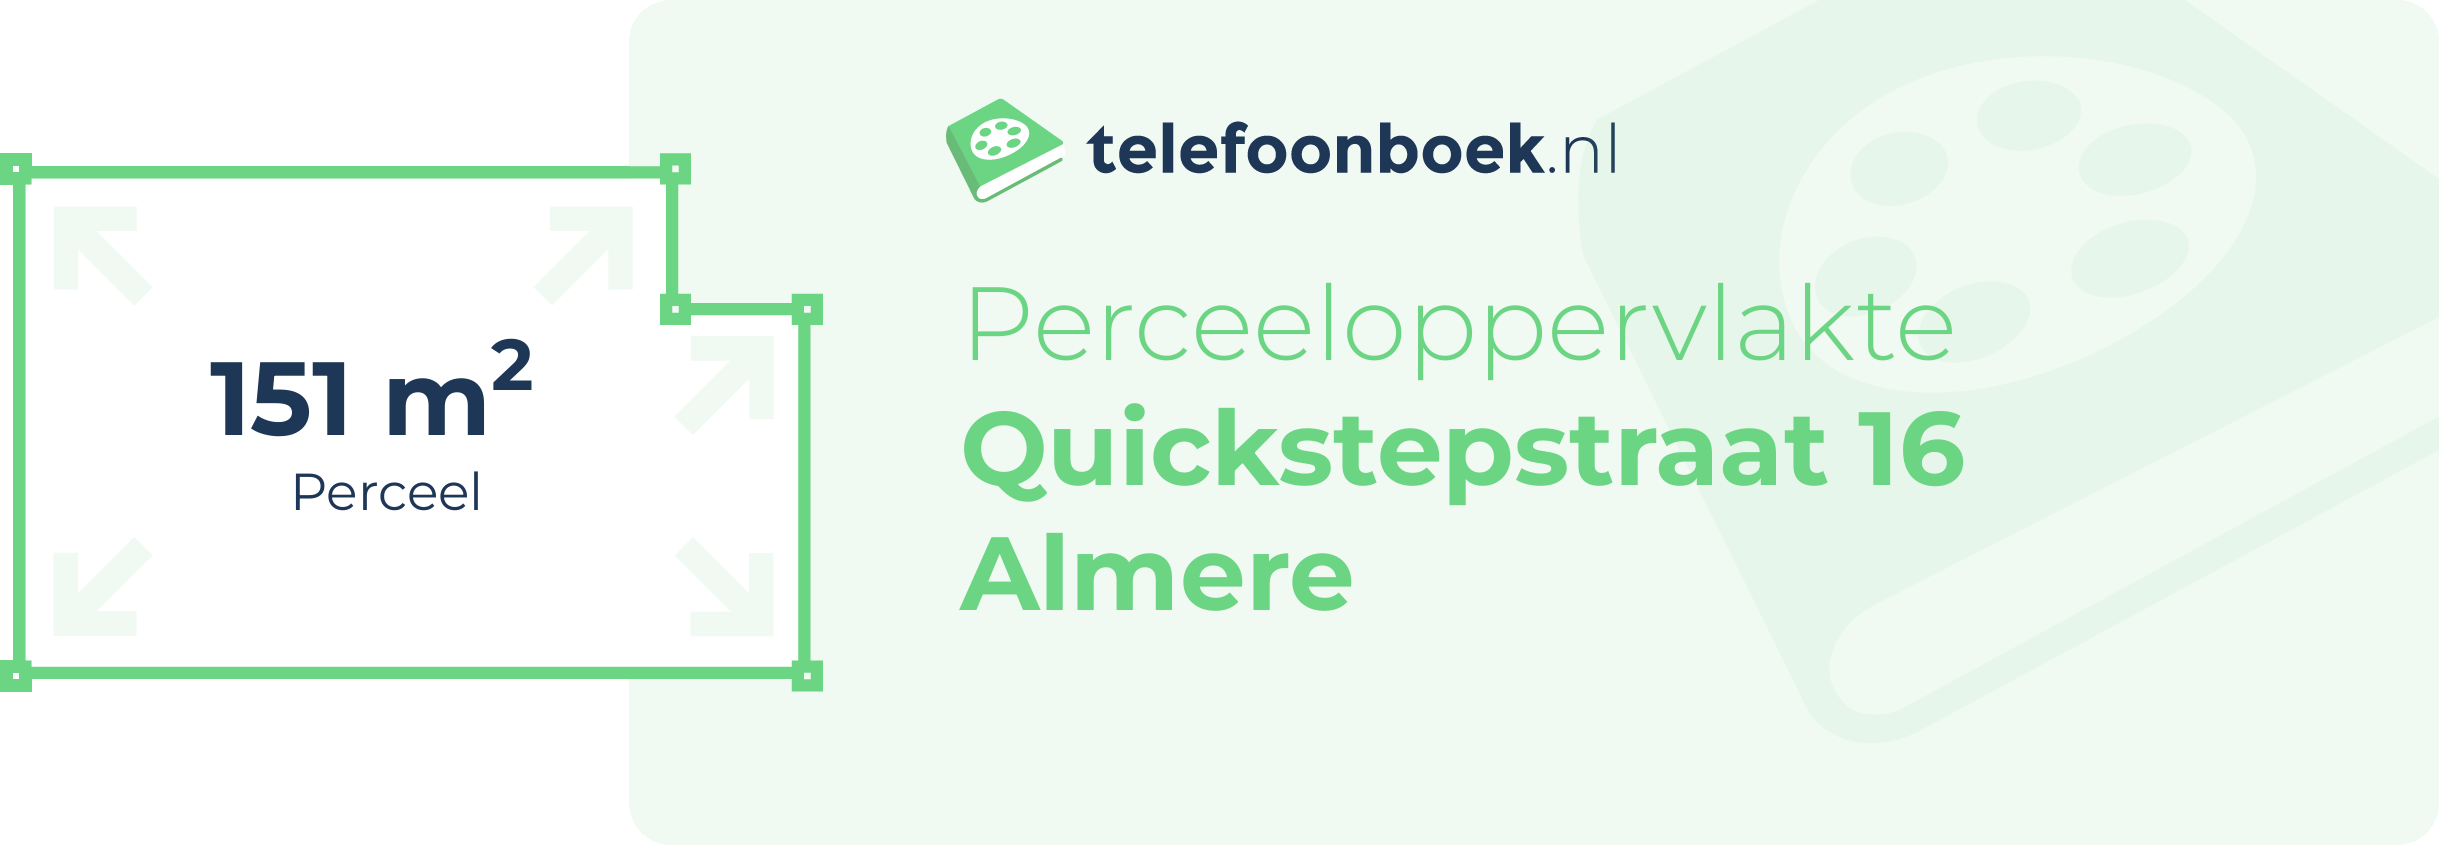 Perceeloppervlakte Quickstepstraat 16 Almere